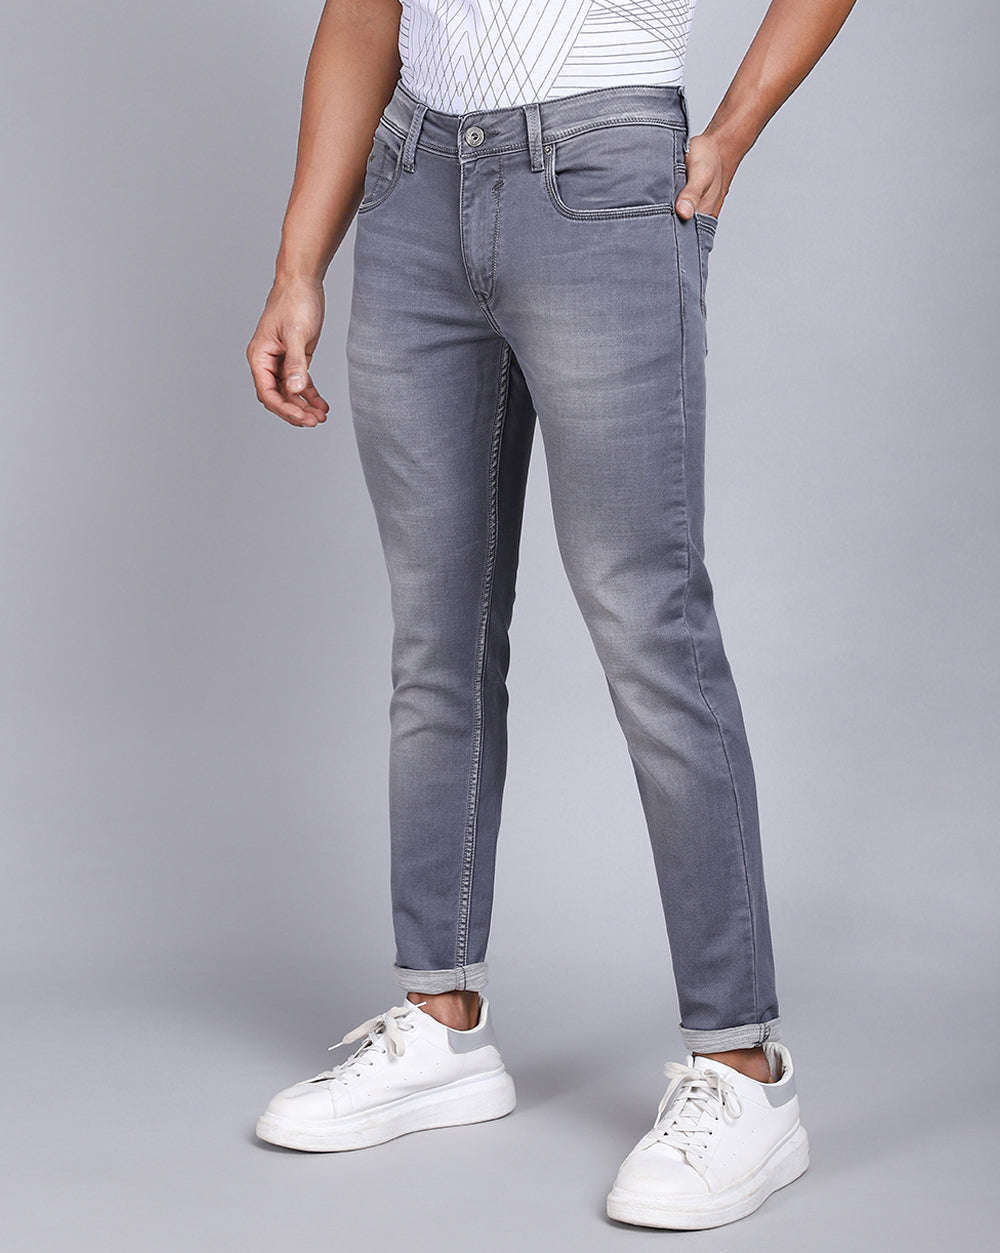 Super Slim Fit Grey Jeans